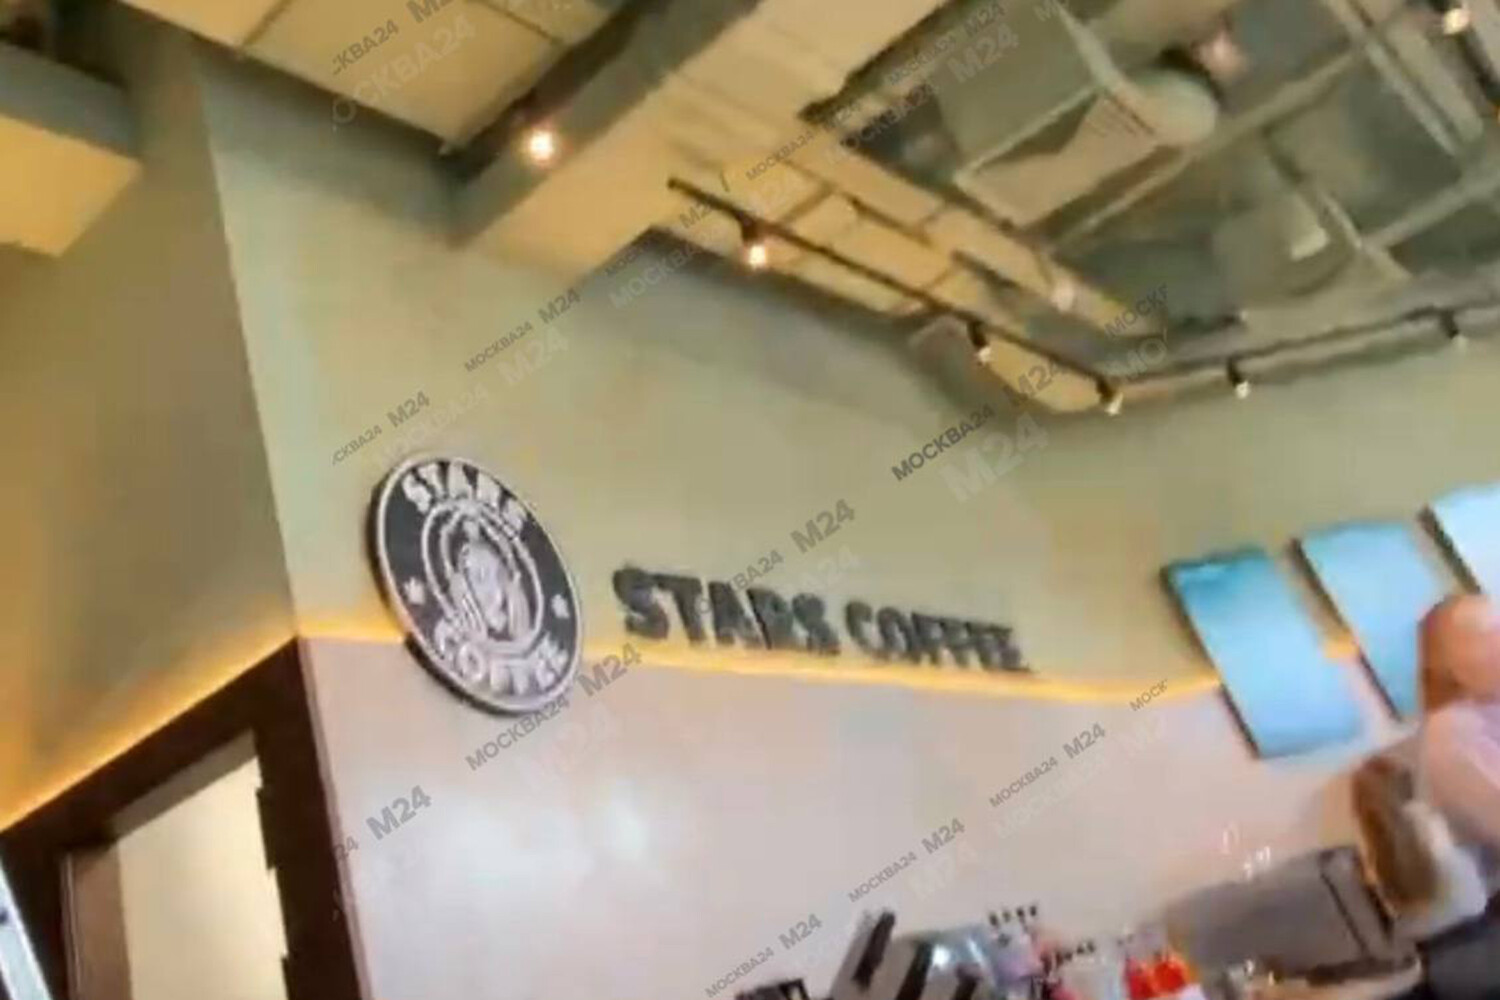 Star coffee новый арбат. Старс кофе логотип. Кофейня Тимати. Старбакс Москва Тимати. Логотип Старбакс Тимати.